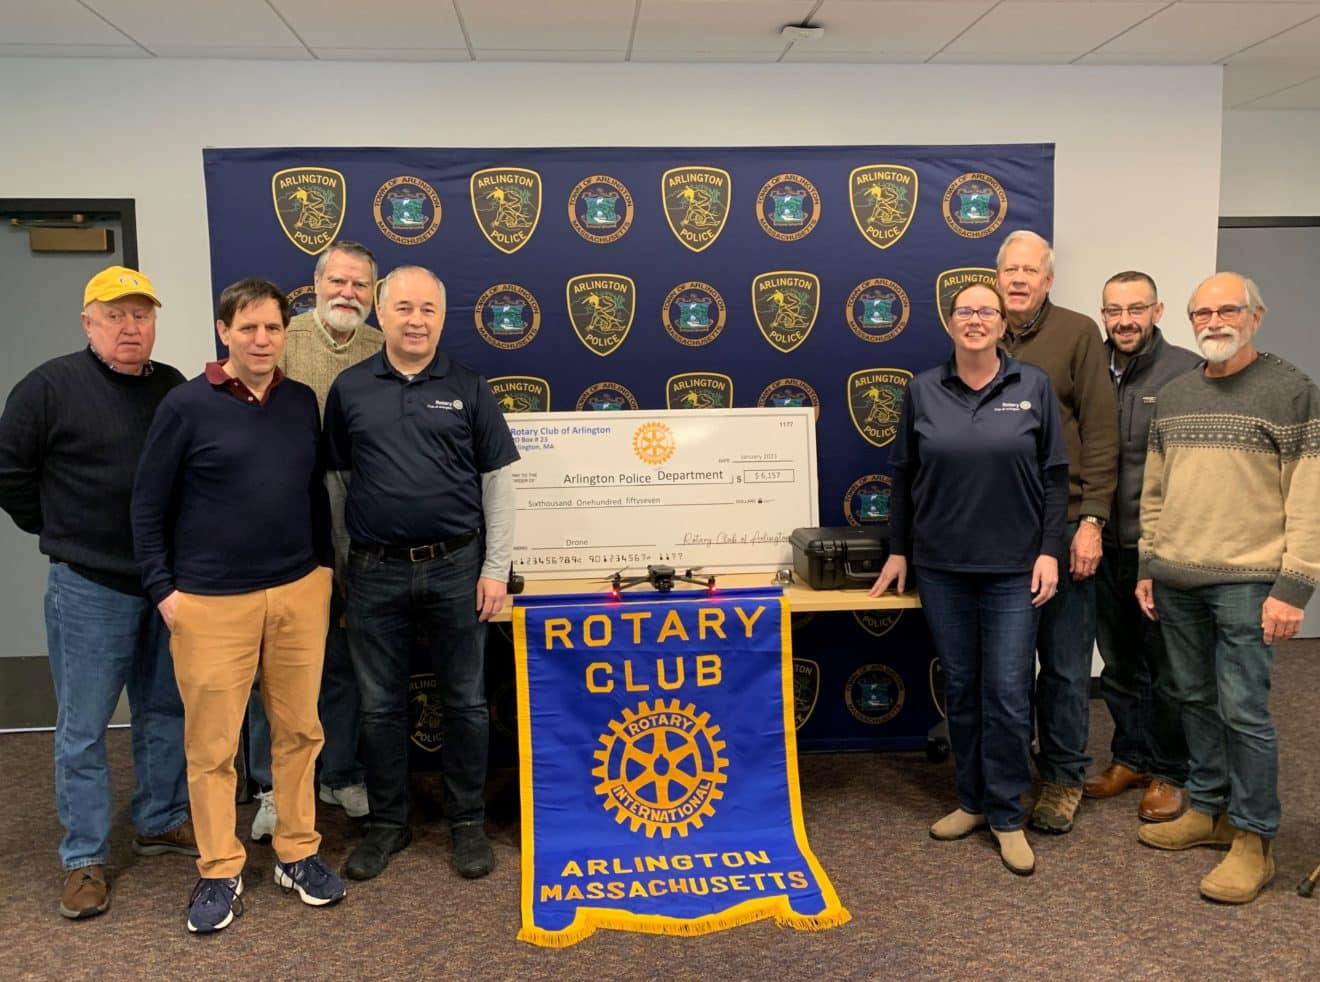 Members of the Rotary Club of Arlington on Jan. 20. (Photo courtesy Arlington Police Department)